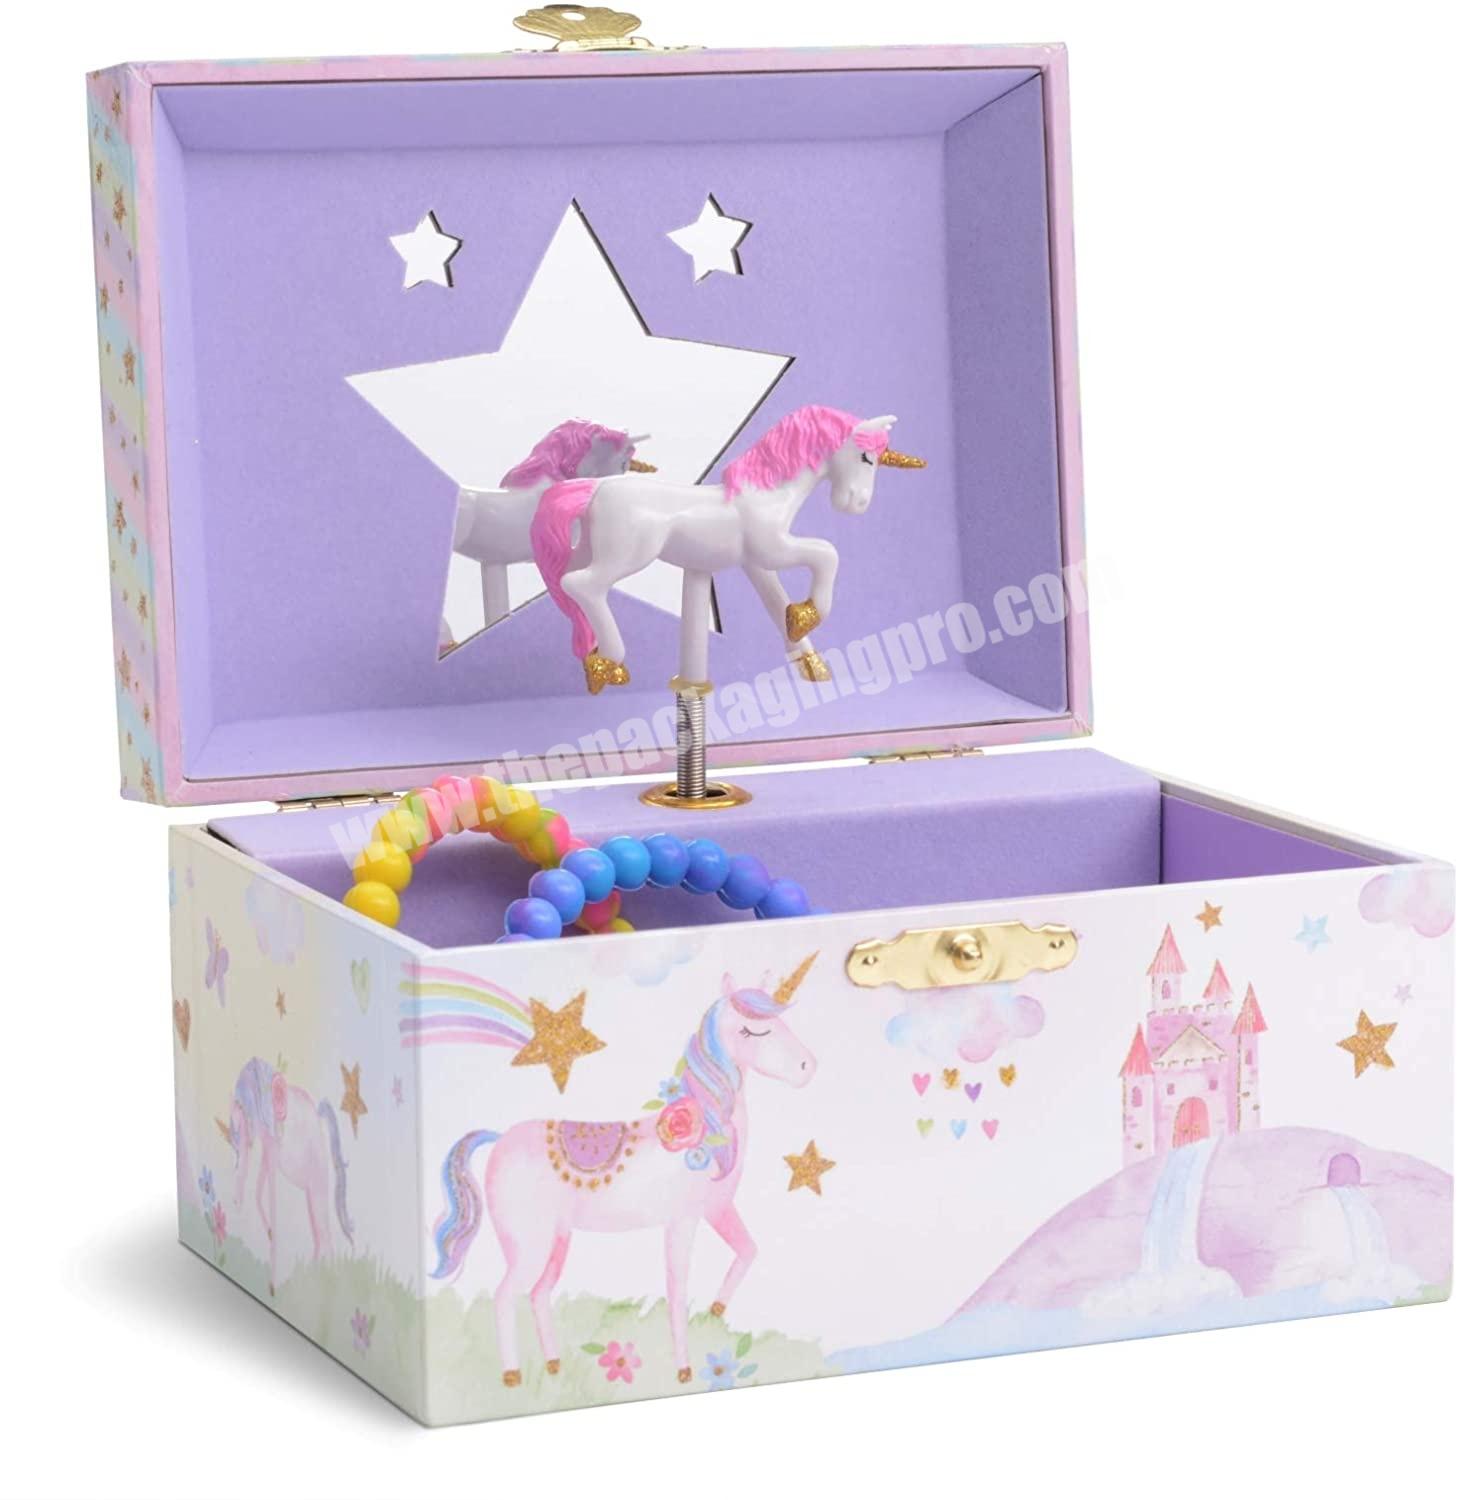 Girl's Musical Jewelry Storage Box with Spinning Unicorn, Glitter Rainbow and Stars Design, The Unicorn Tune